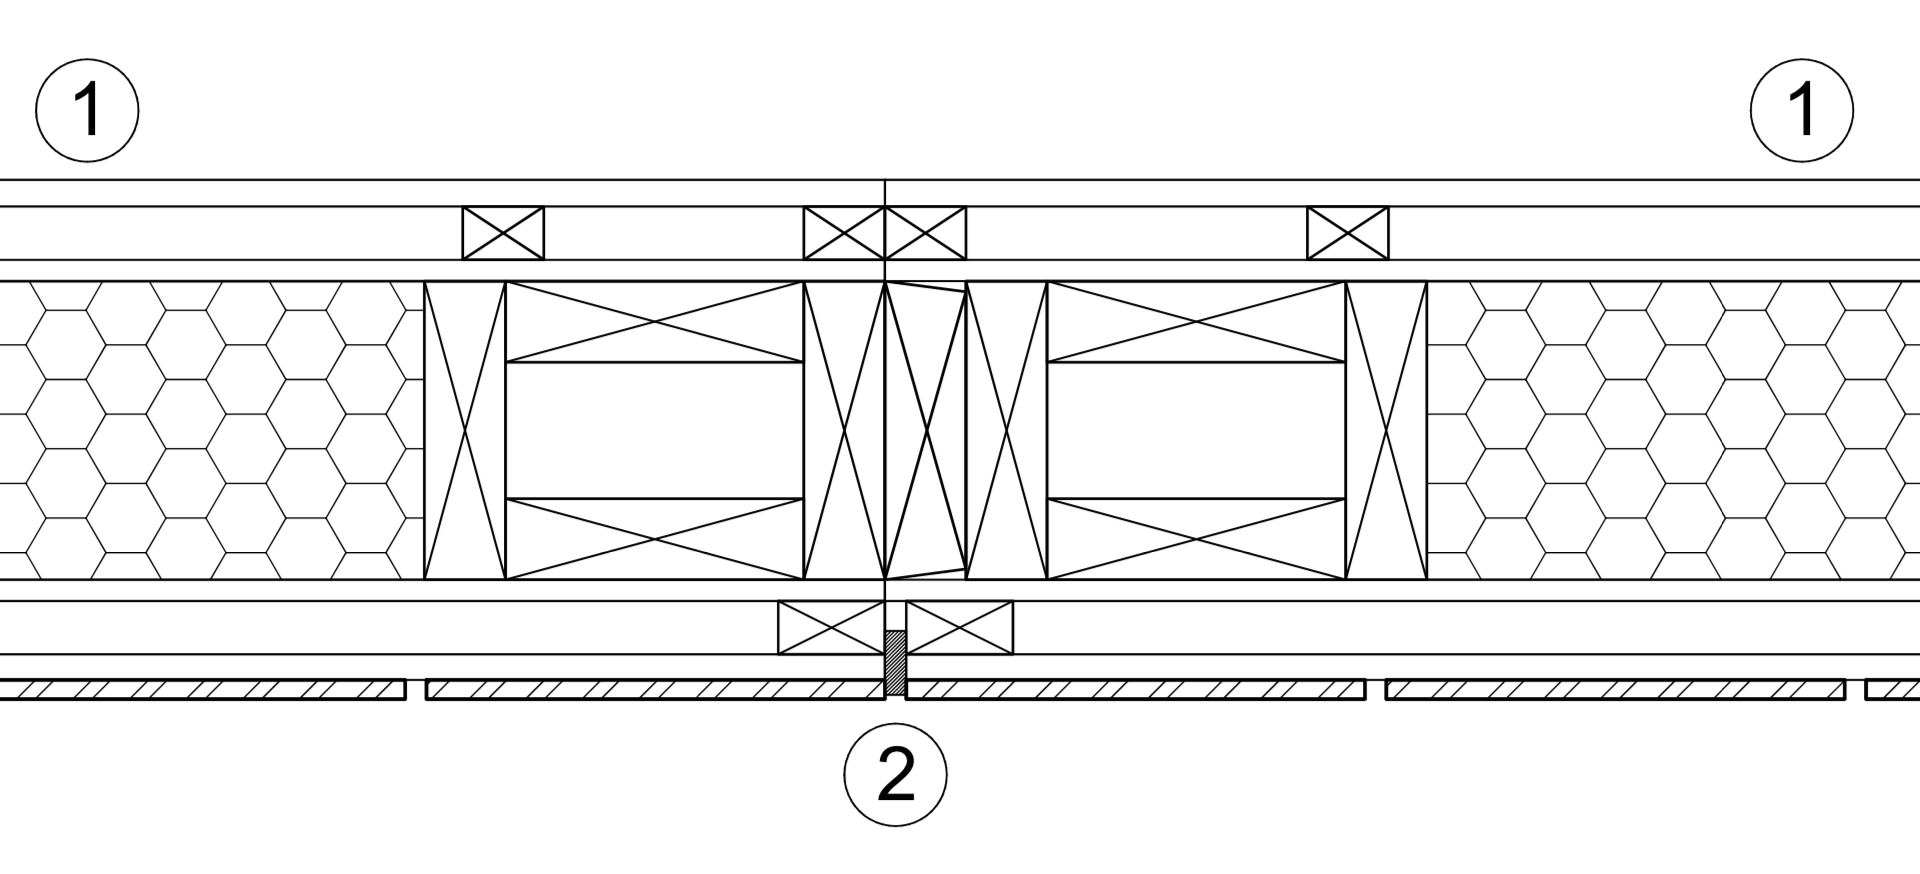 Figure 1.10 Thermal bridge exceptions.